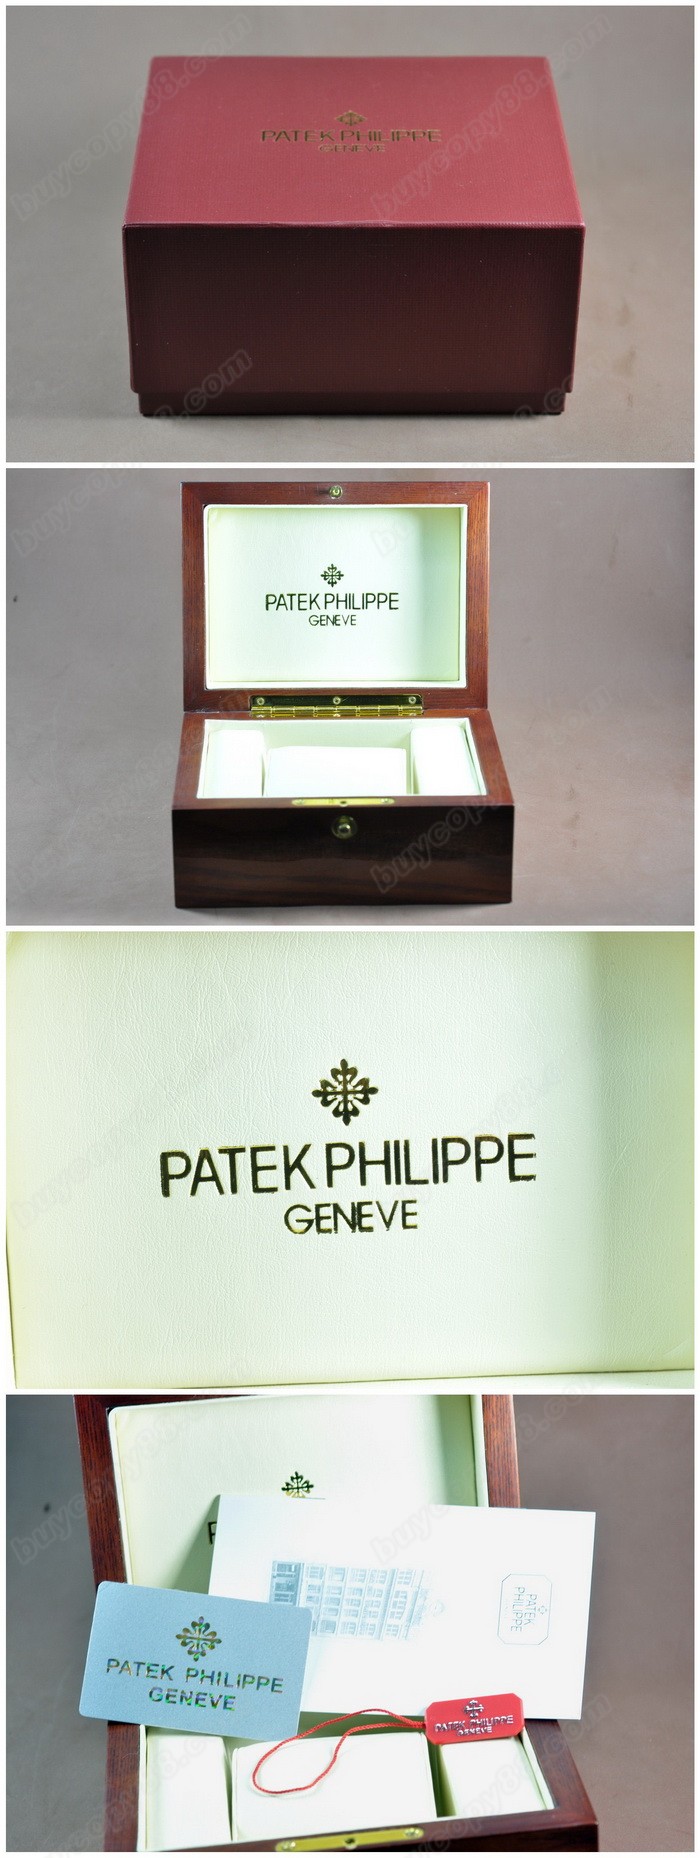 PatekPhilippe原廠錶盒-送禮講究-收藏把玩首選0